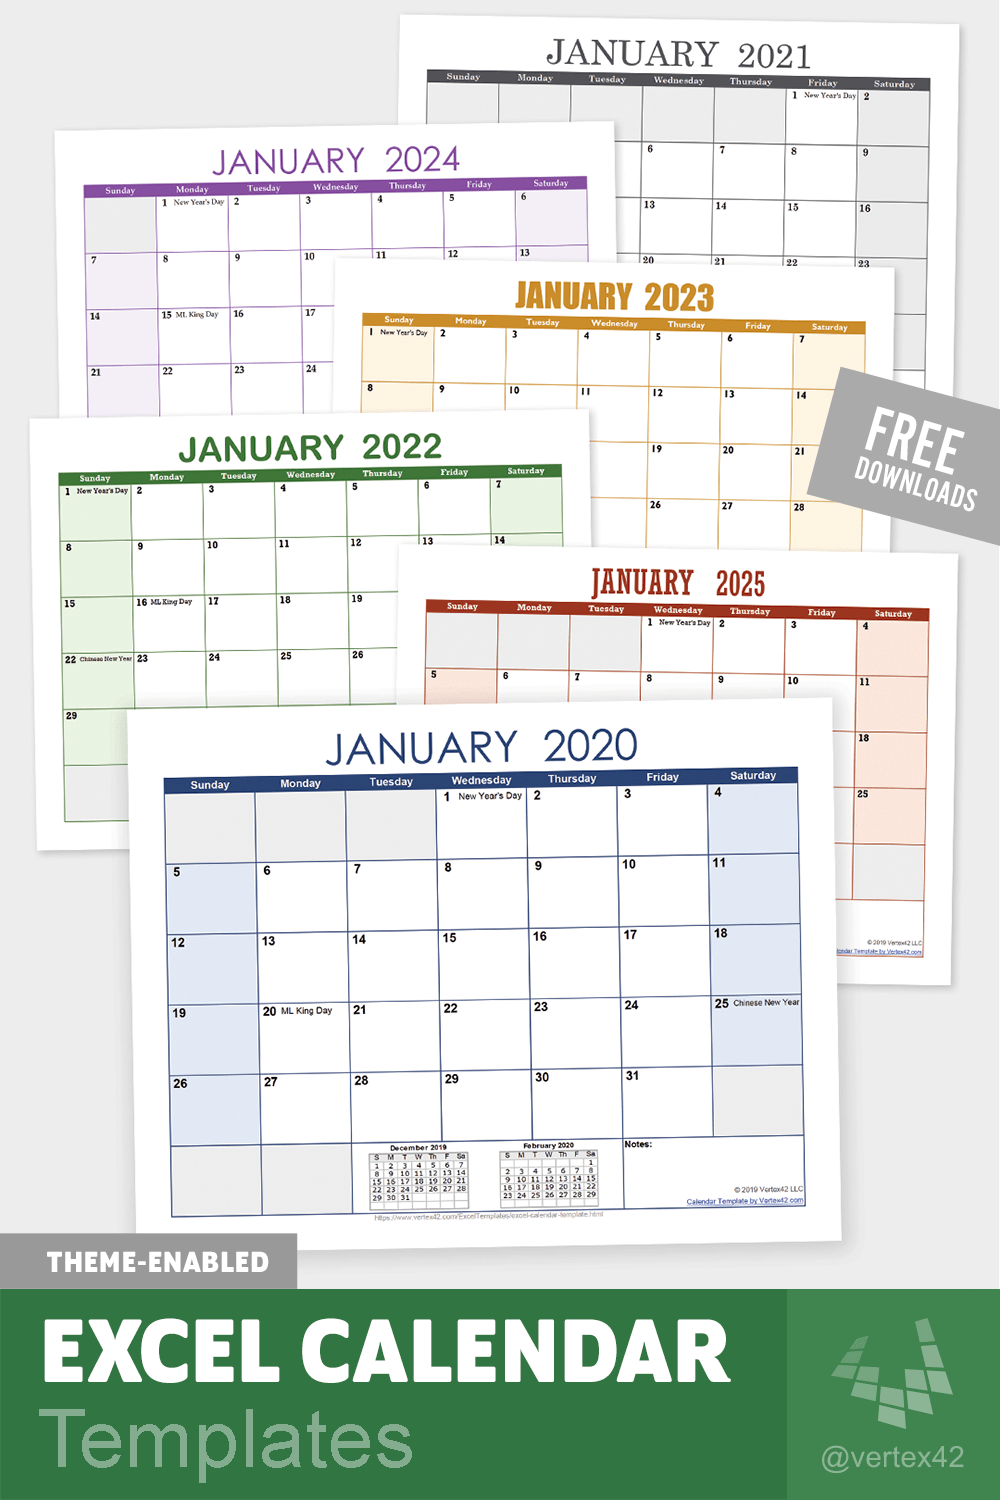 Excel Calendar Templates | Excel calendar template, Excel calendar